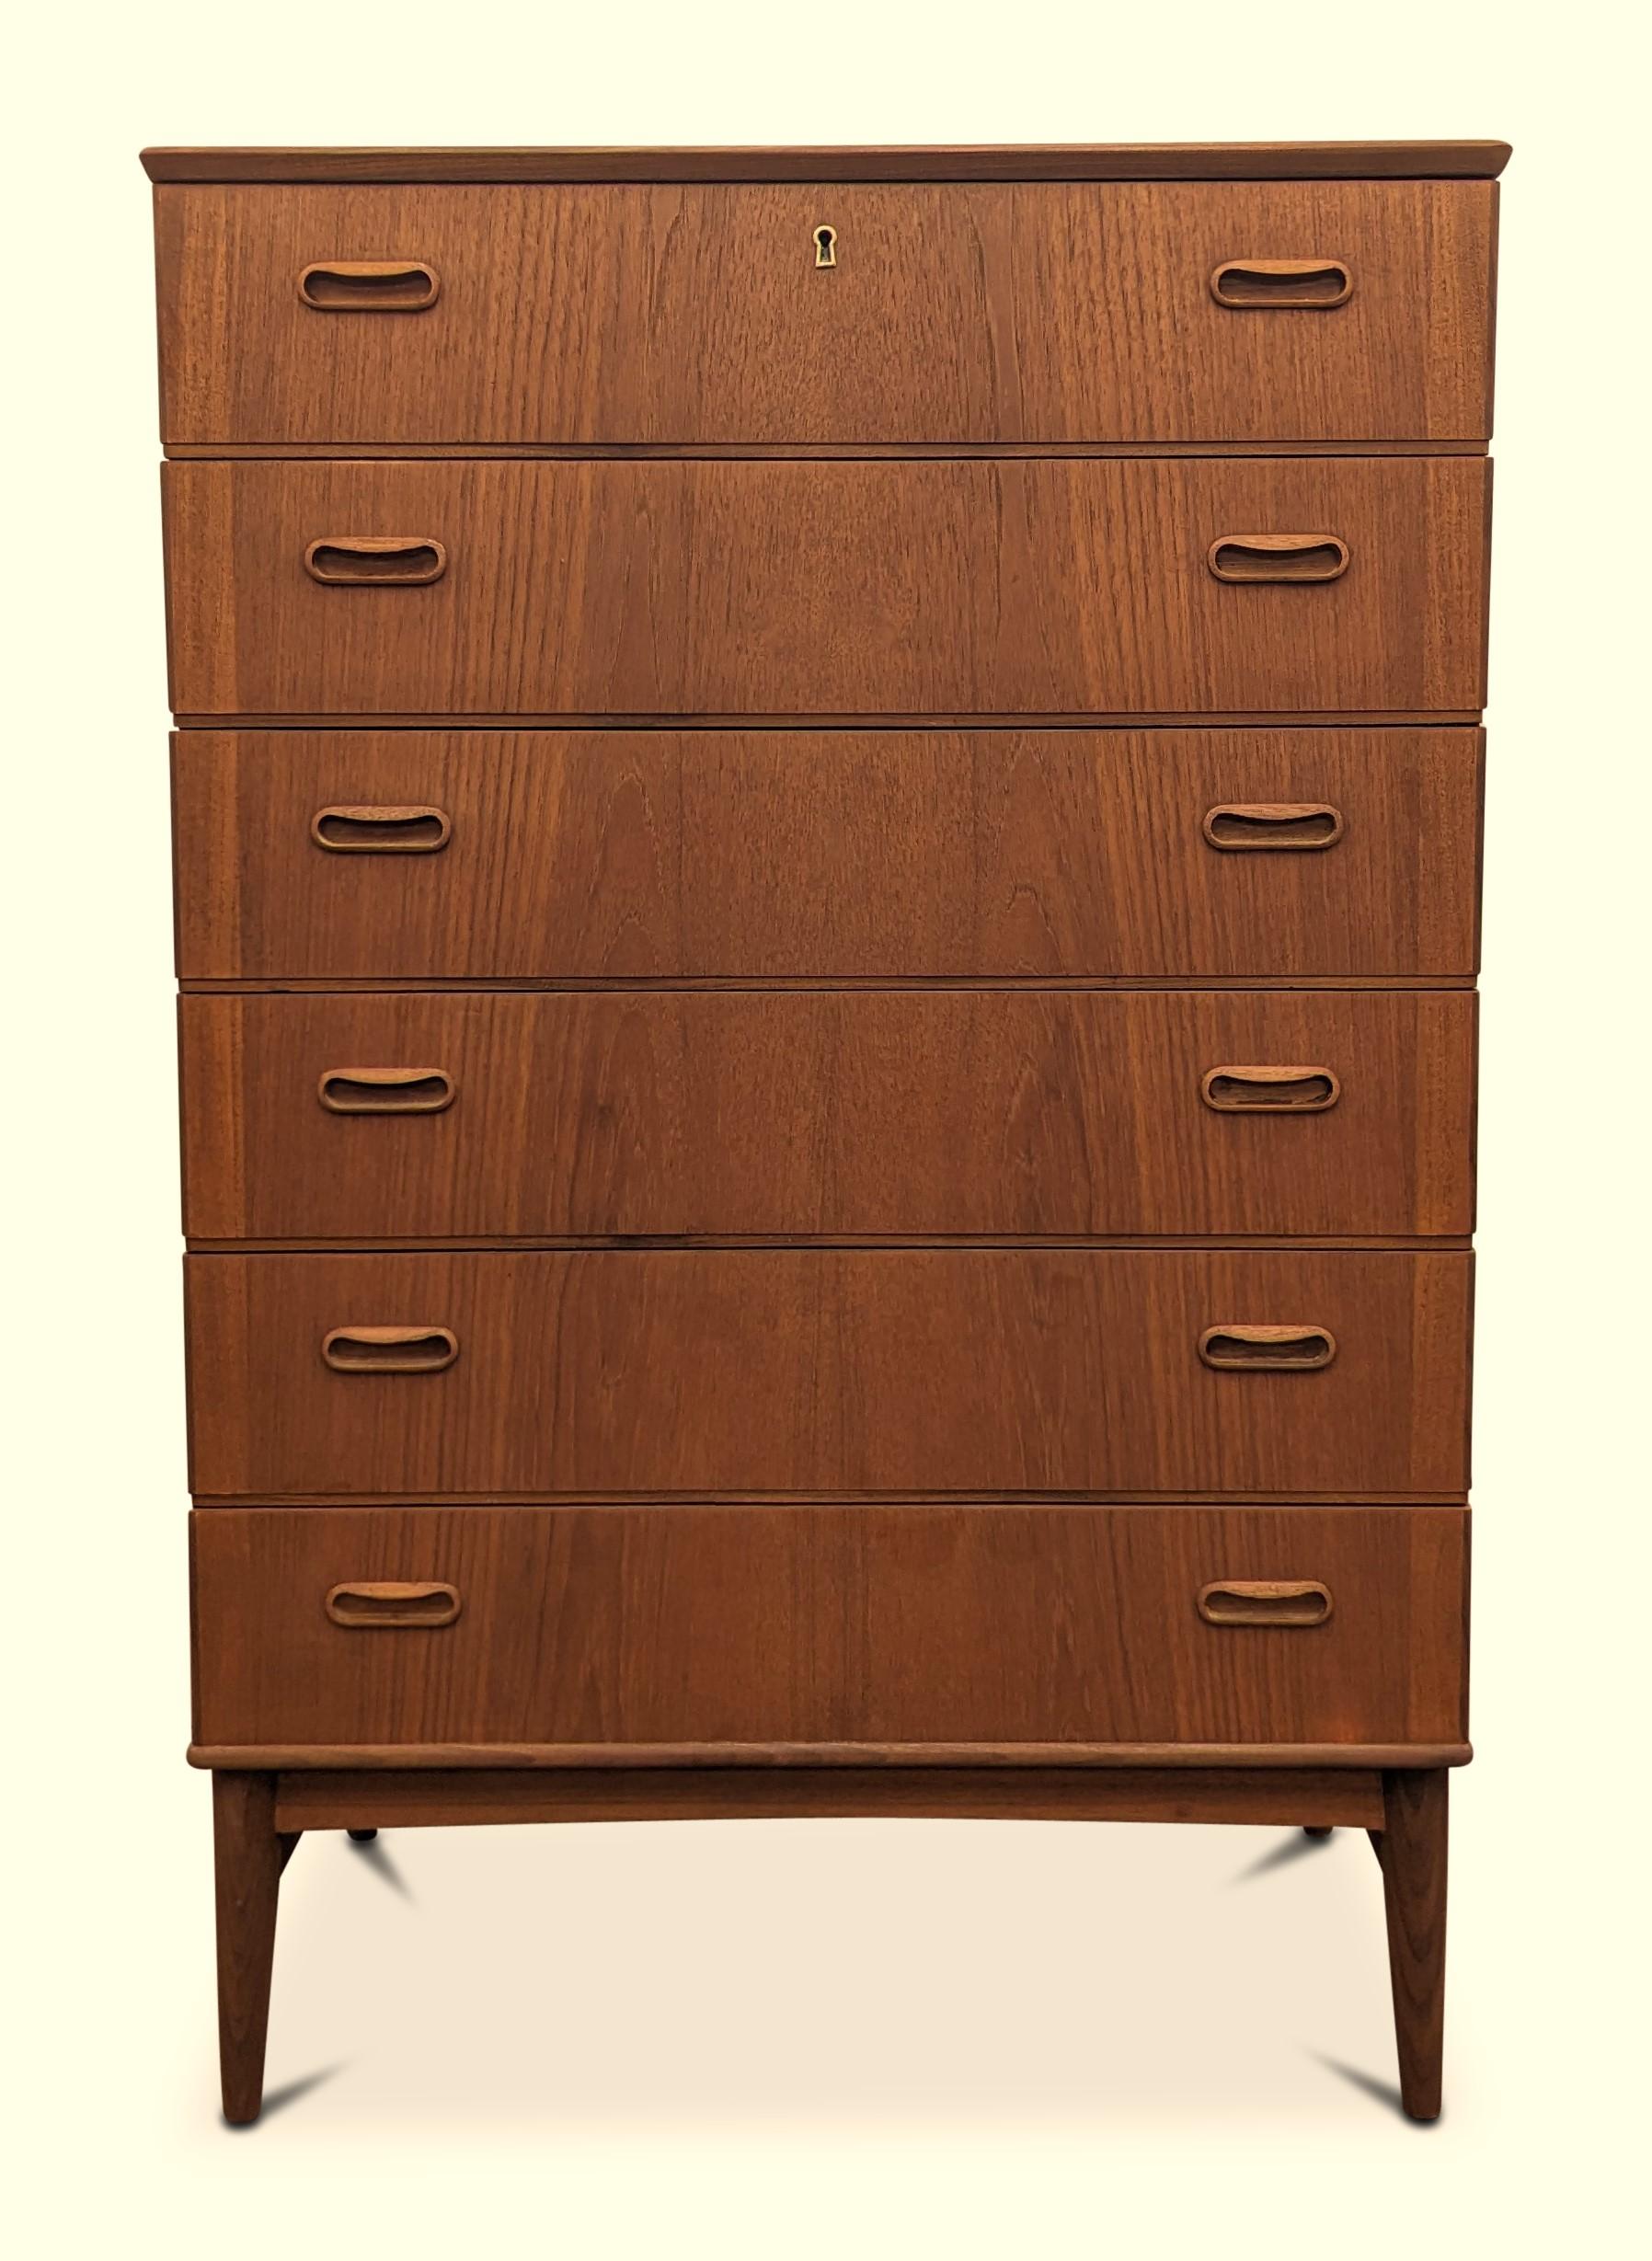 Scandinavian Modern Vintage Danish MCM Teak High Boy Dresser - 042402 For Sale